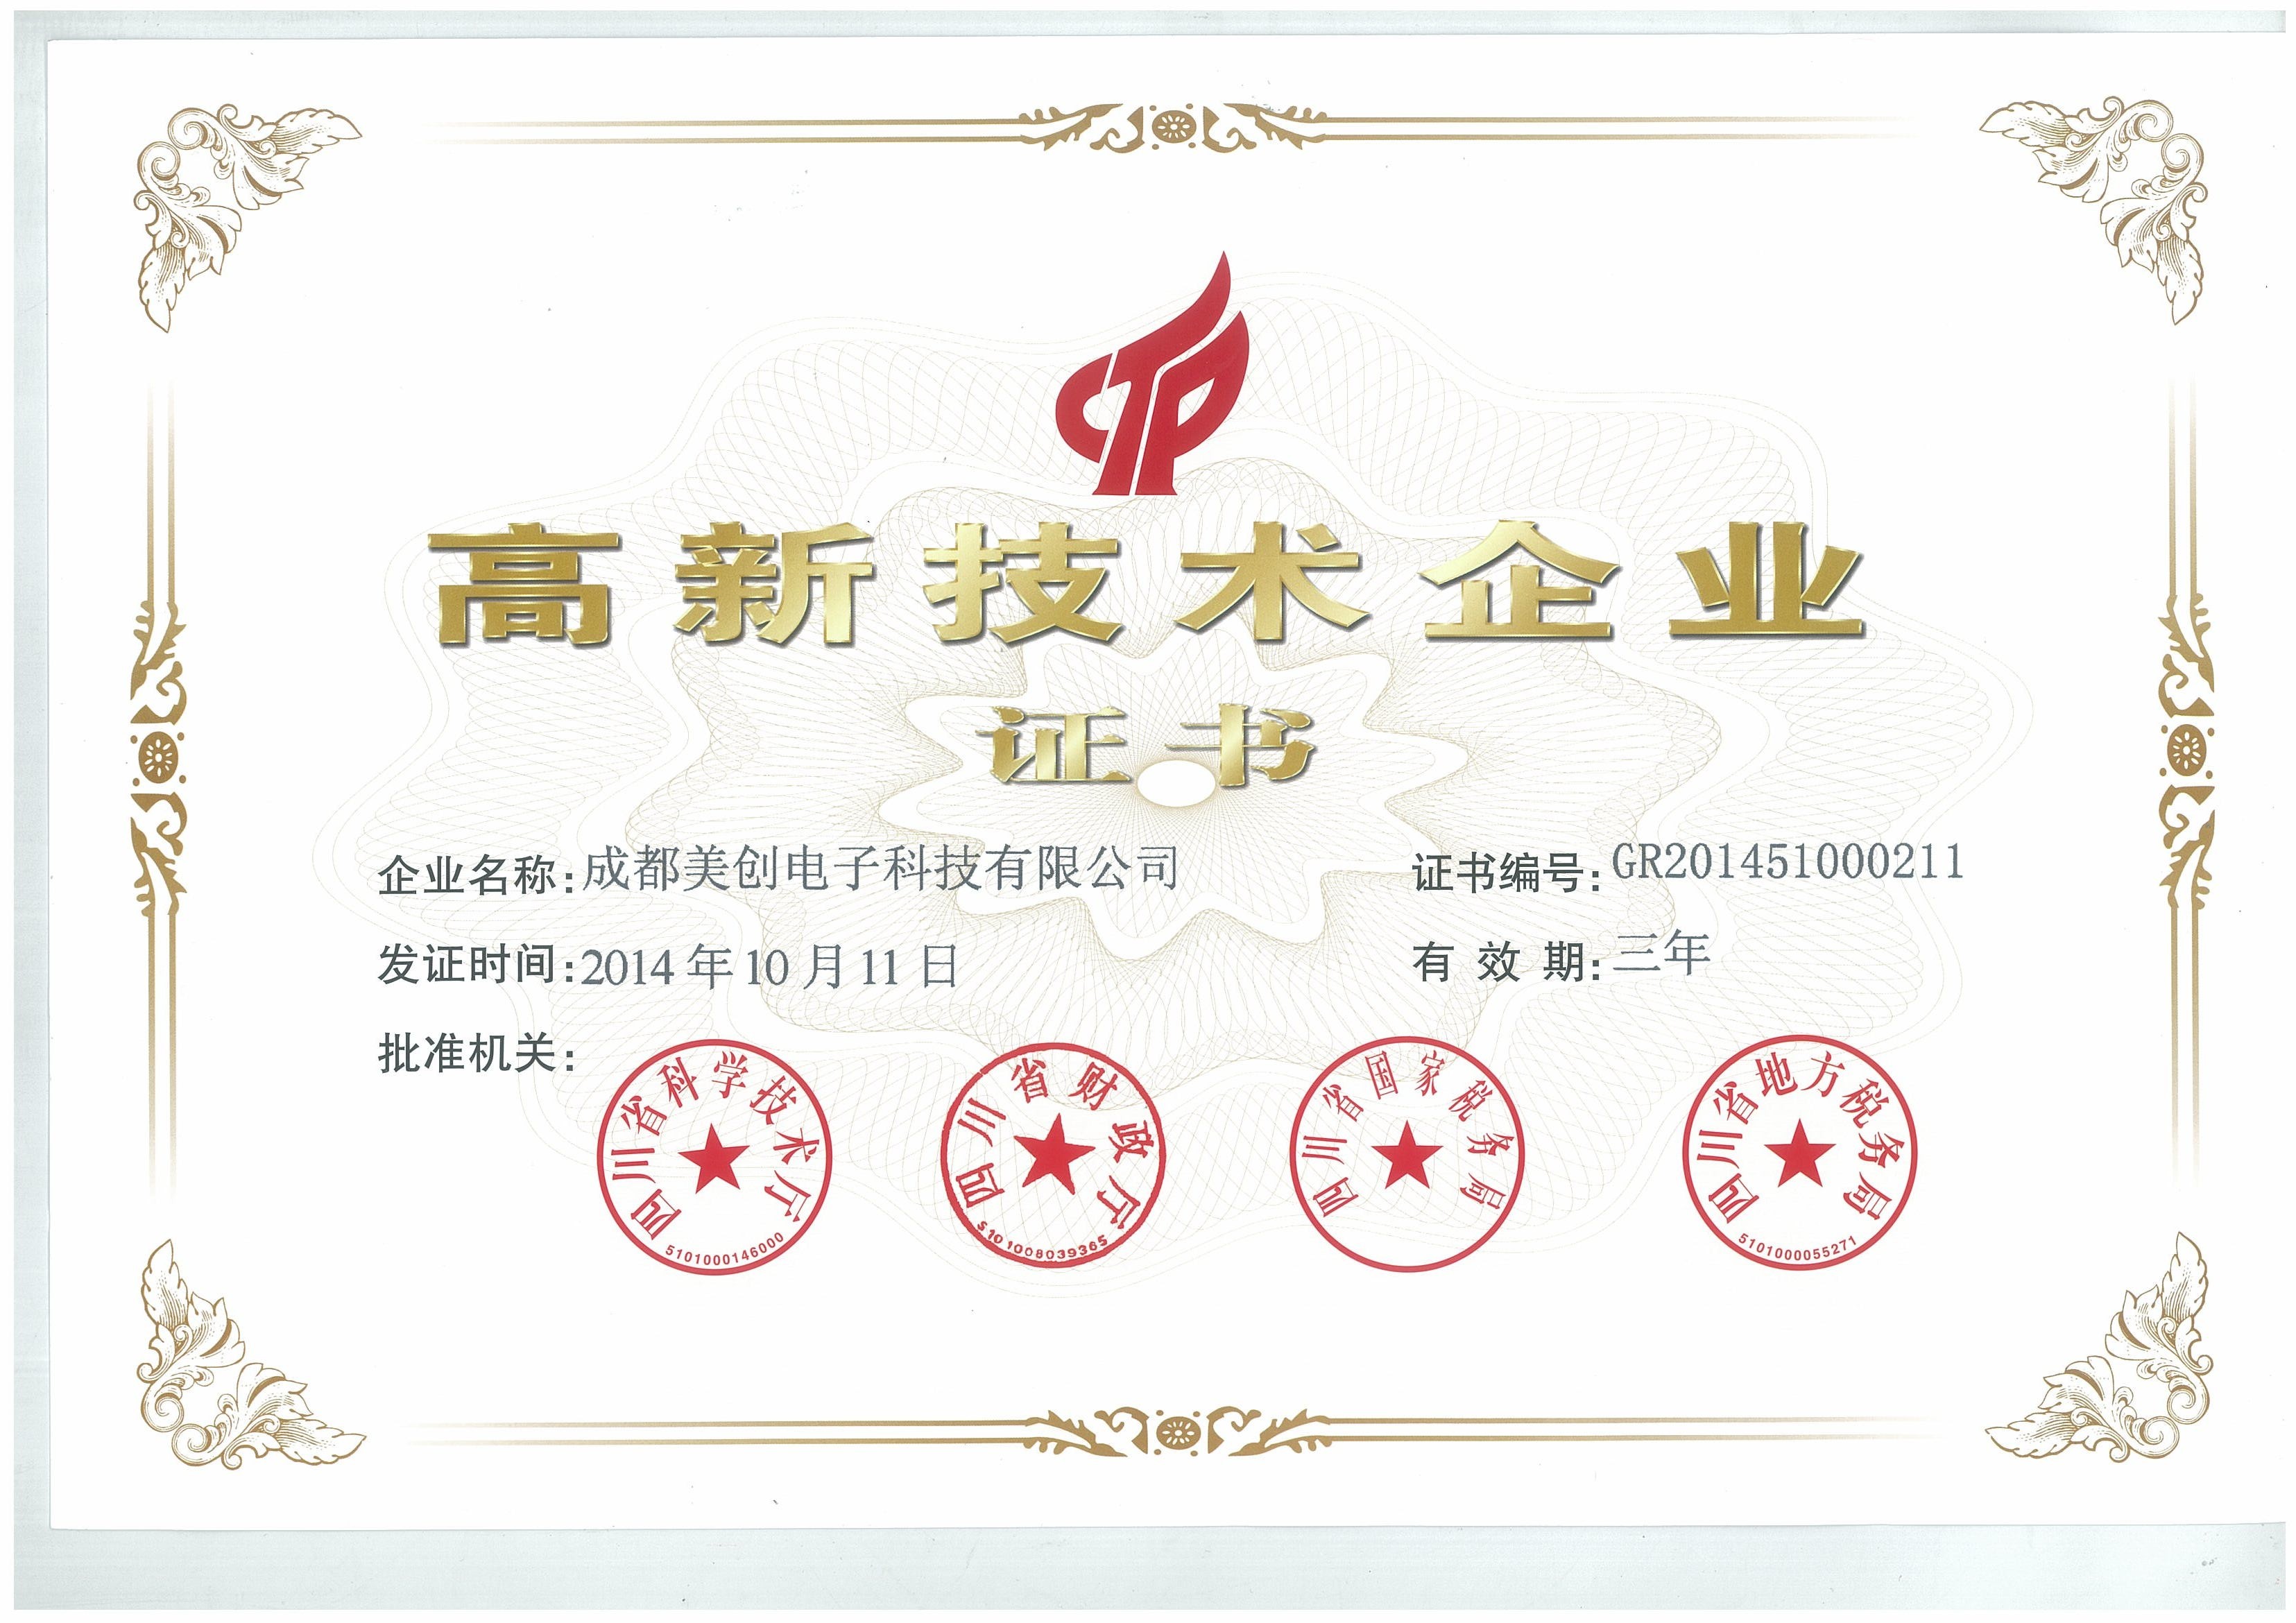 Китай Chengdu Mechan Electronic Technology Co., Ltd Сертификаты